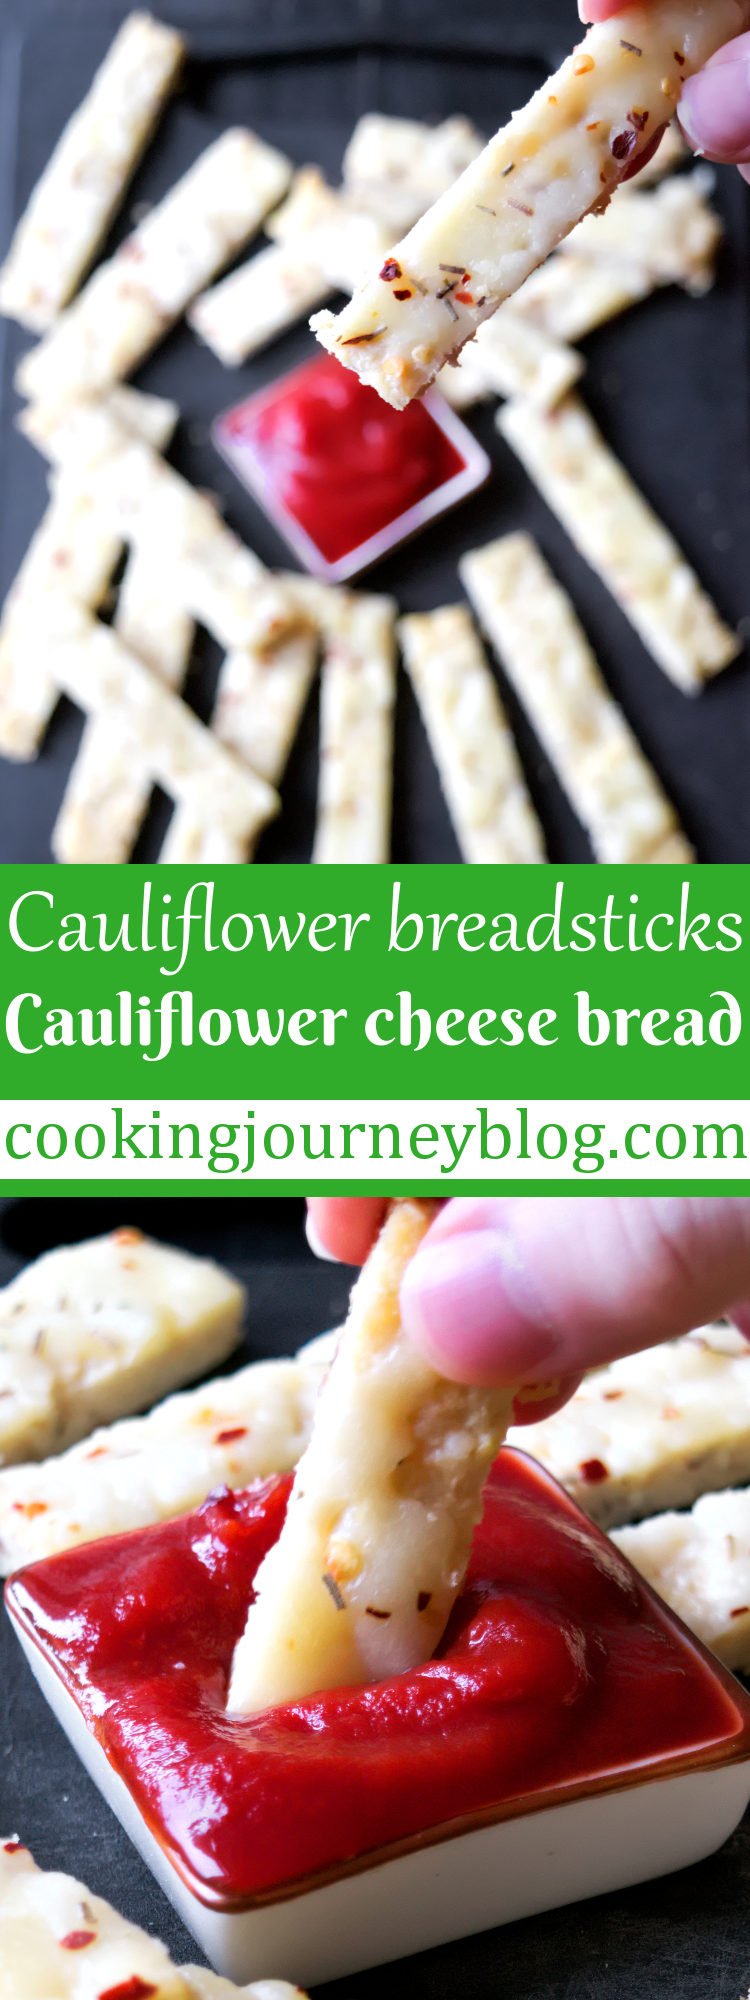 Cheesy cauliflower breadstick and tomato sauce.